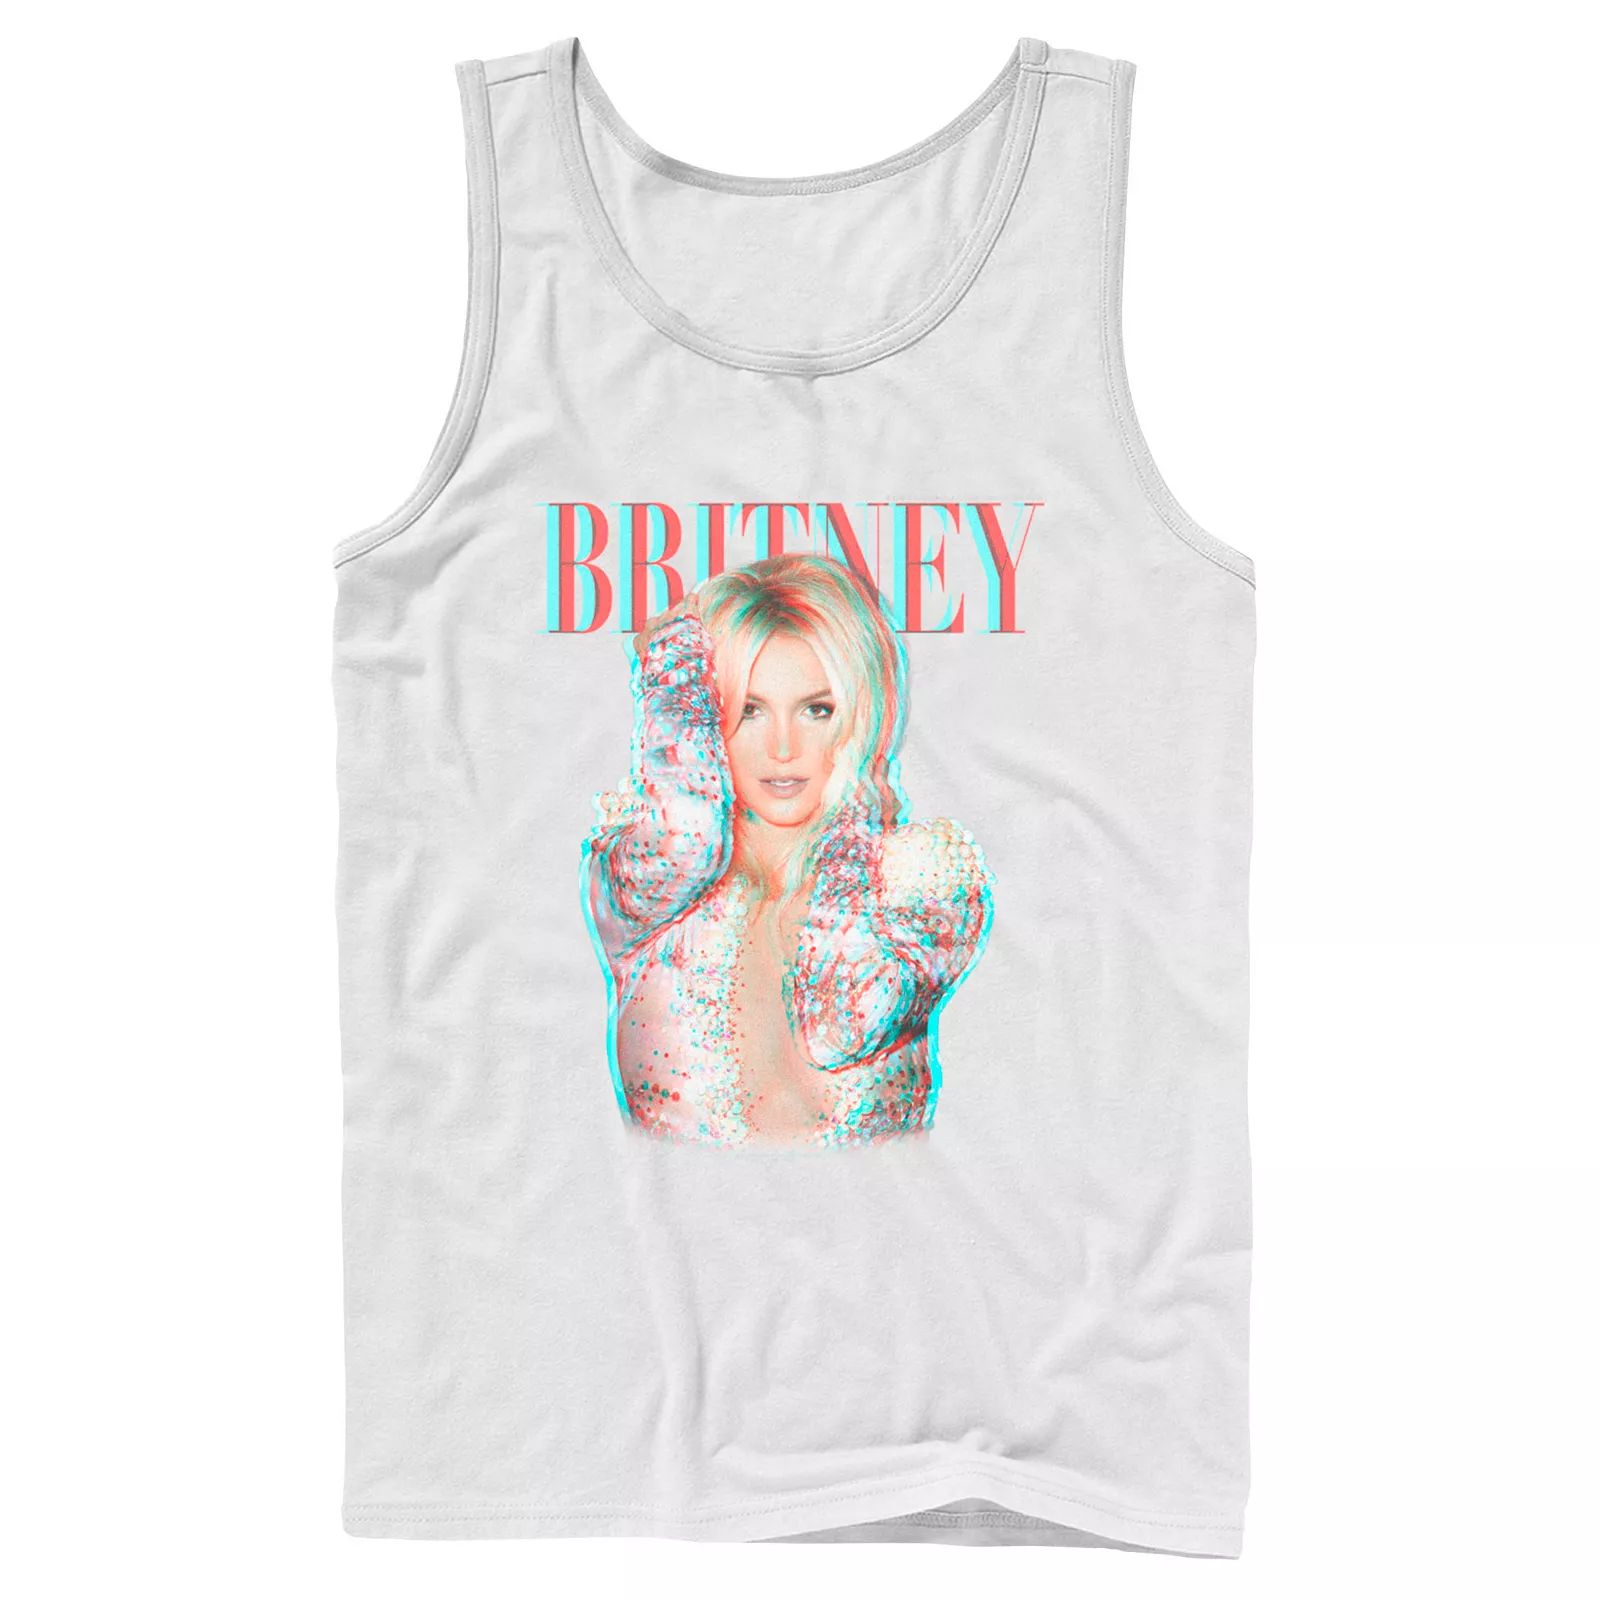 Men's Britney Spears Glitch Portrait Tank, Size: XL, White | Kohl's